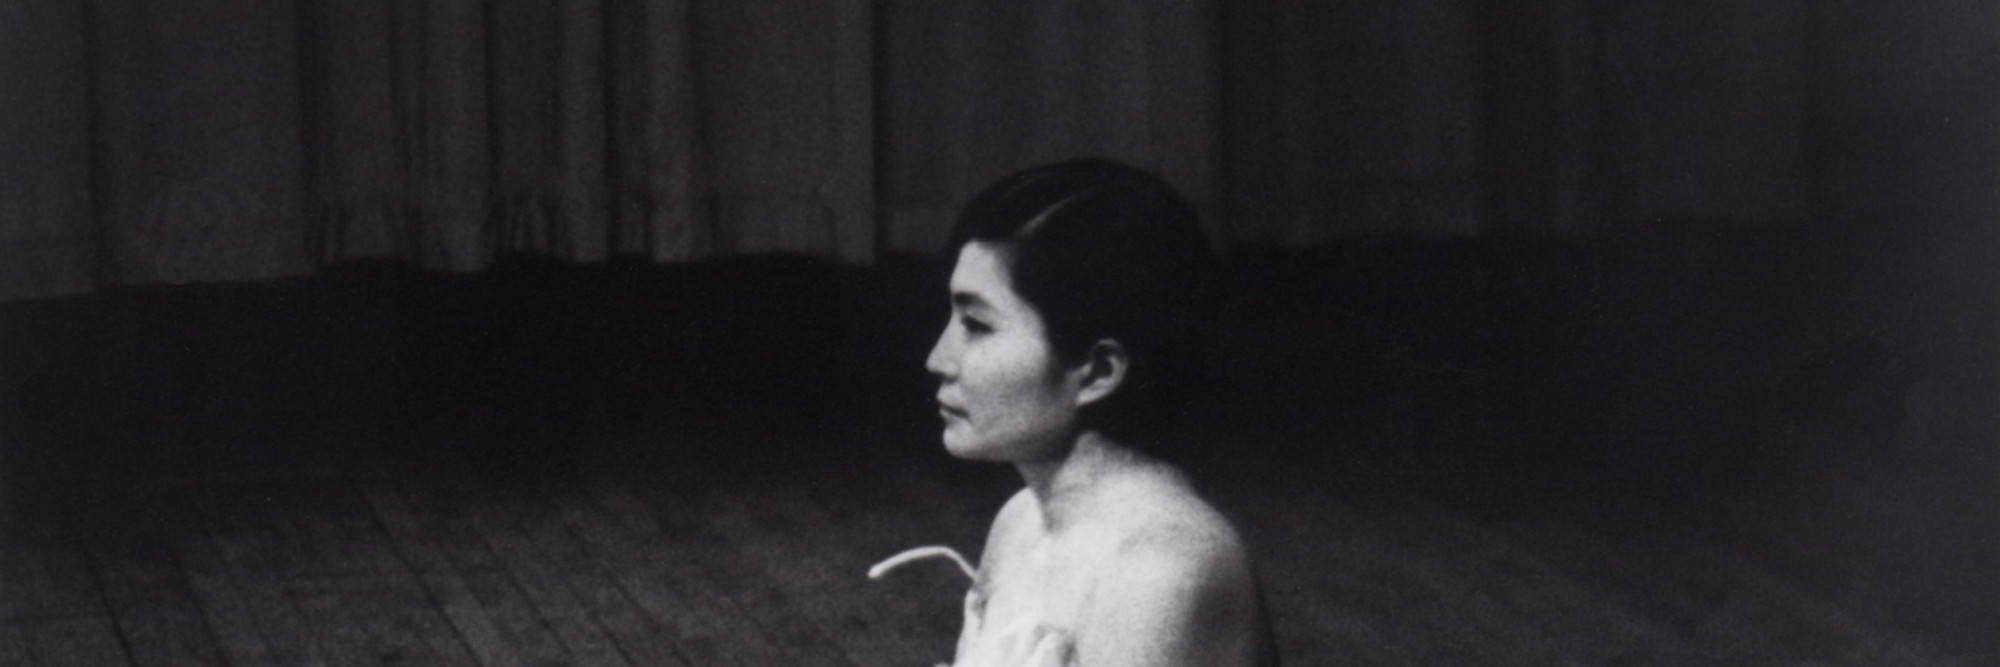 Yoko Ono One Woman Show 1960 1971 Moma